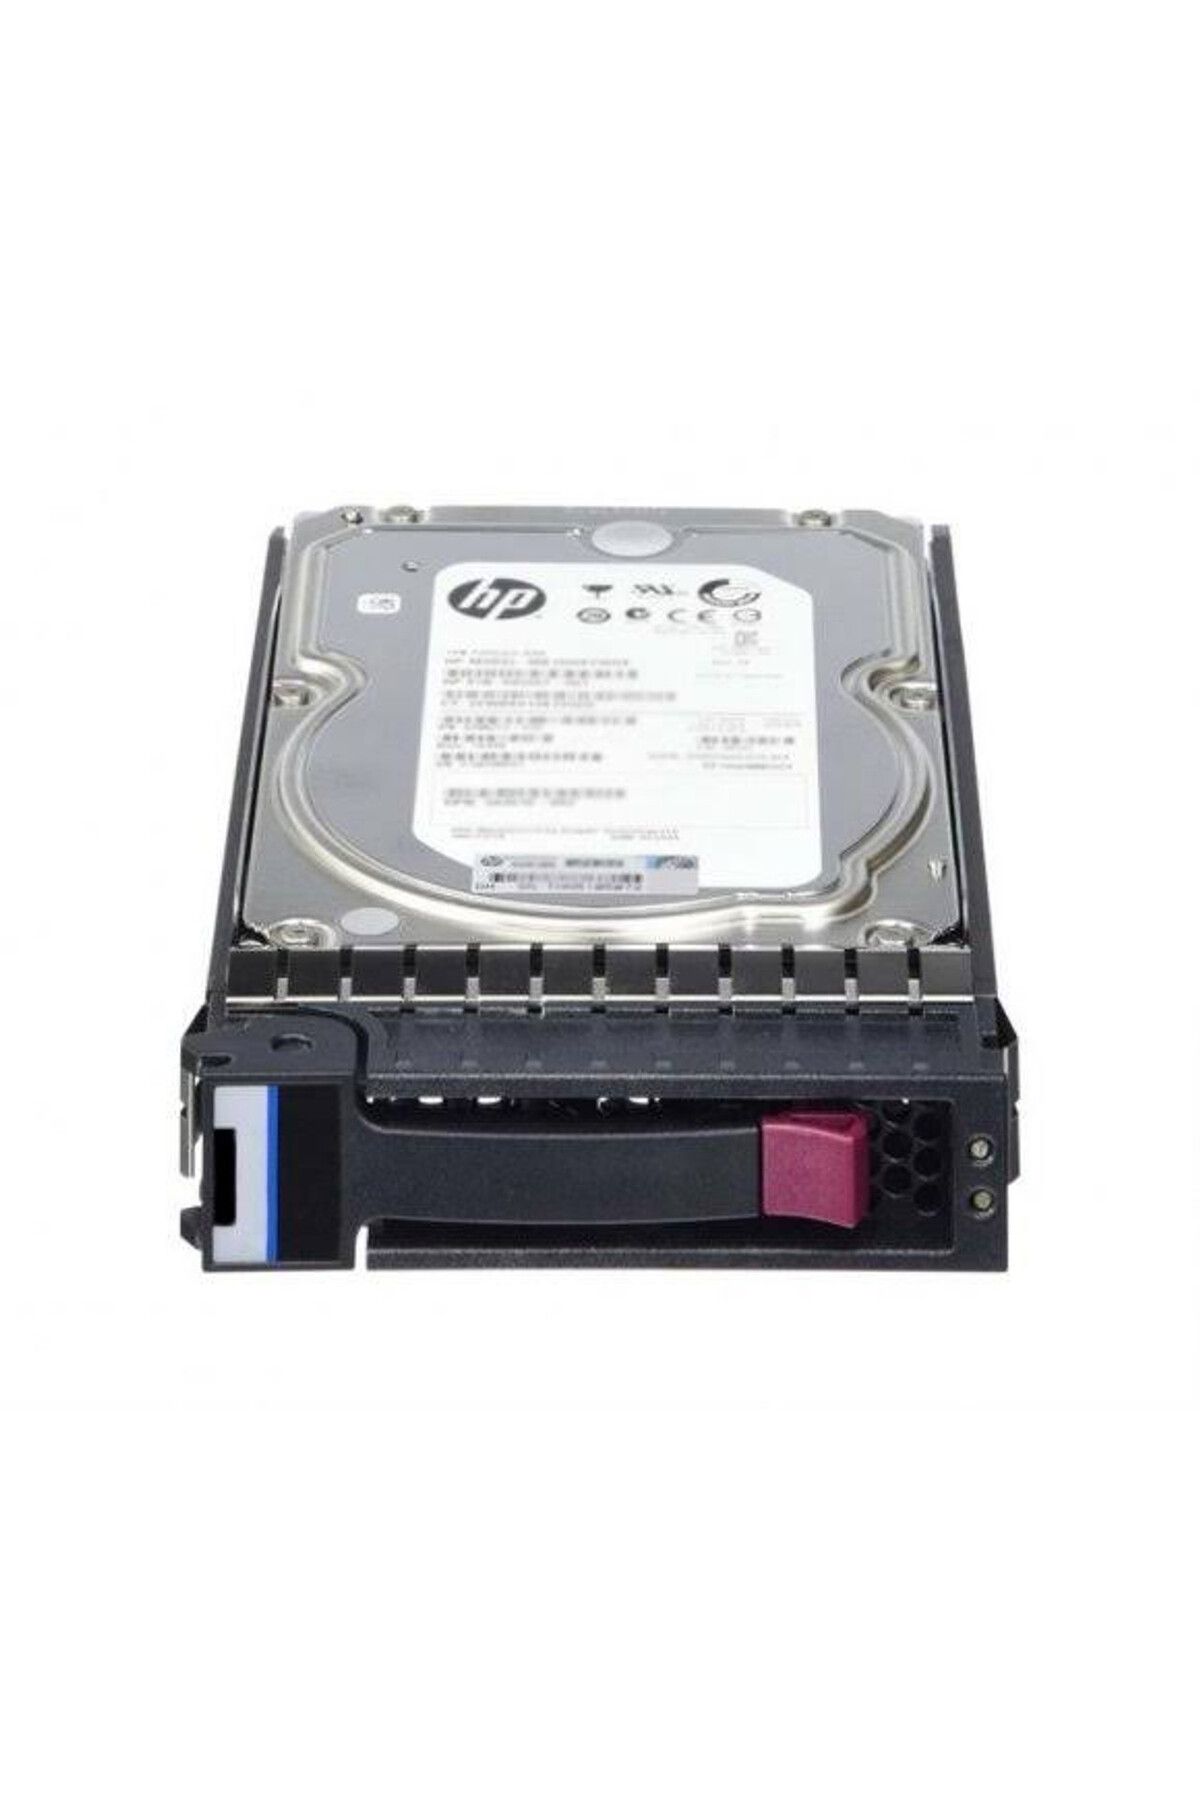 HP D2PRFY2 600GB 15K SERVER HDD (YENİLENMİŞ)